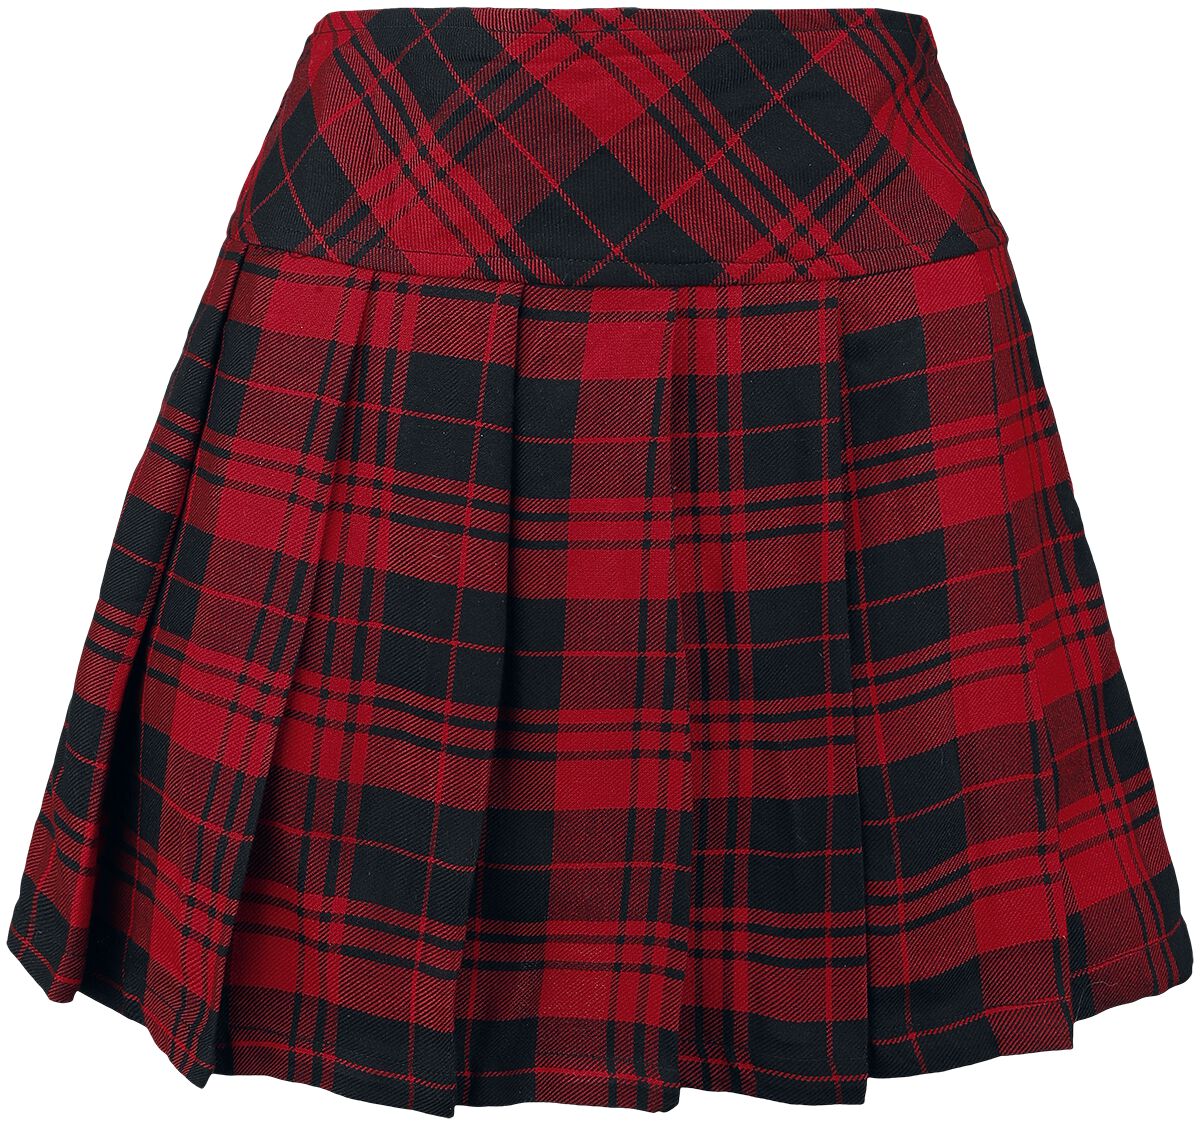 Heartless Zorya Skirt Kurzer Rock rot schwarz in XXL